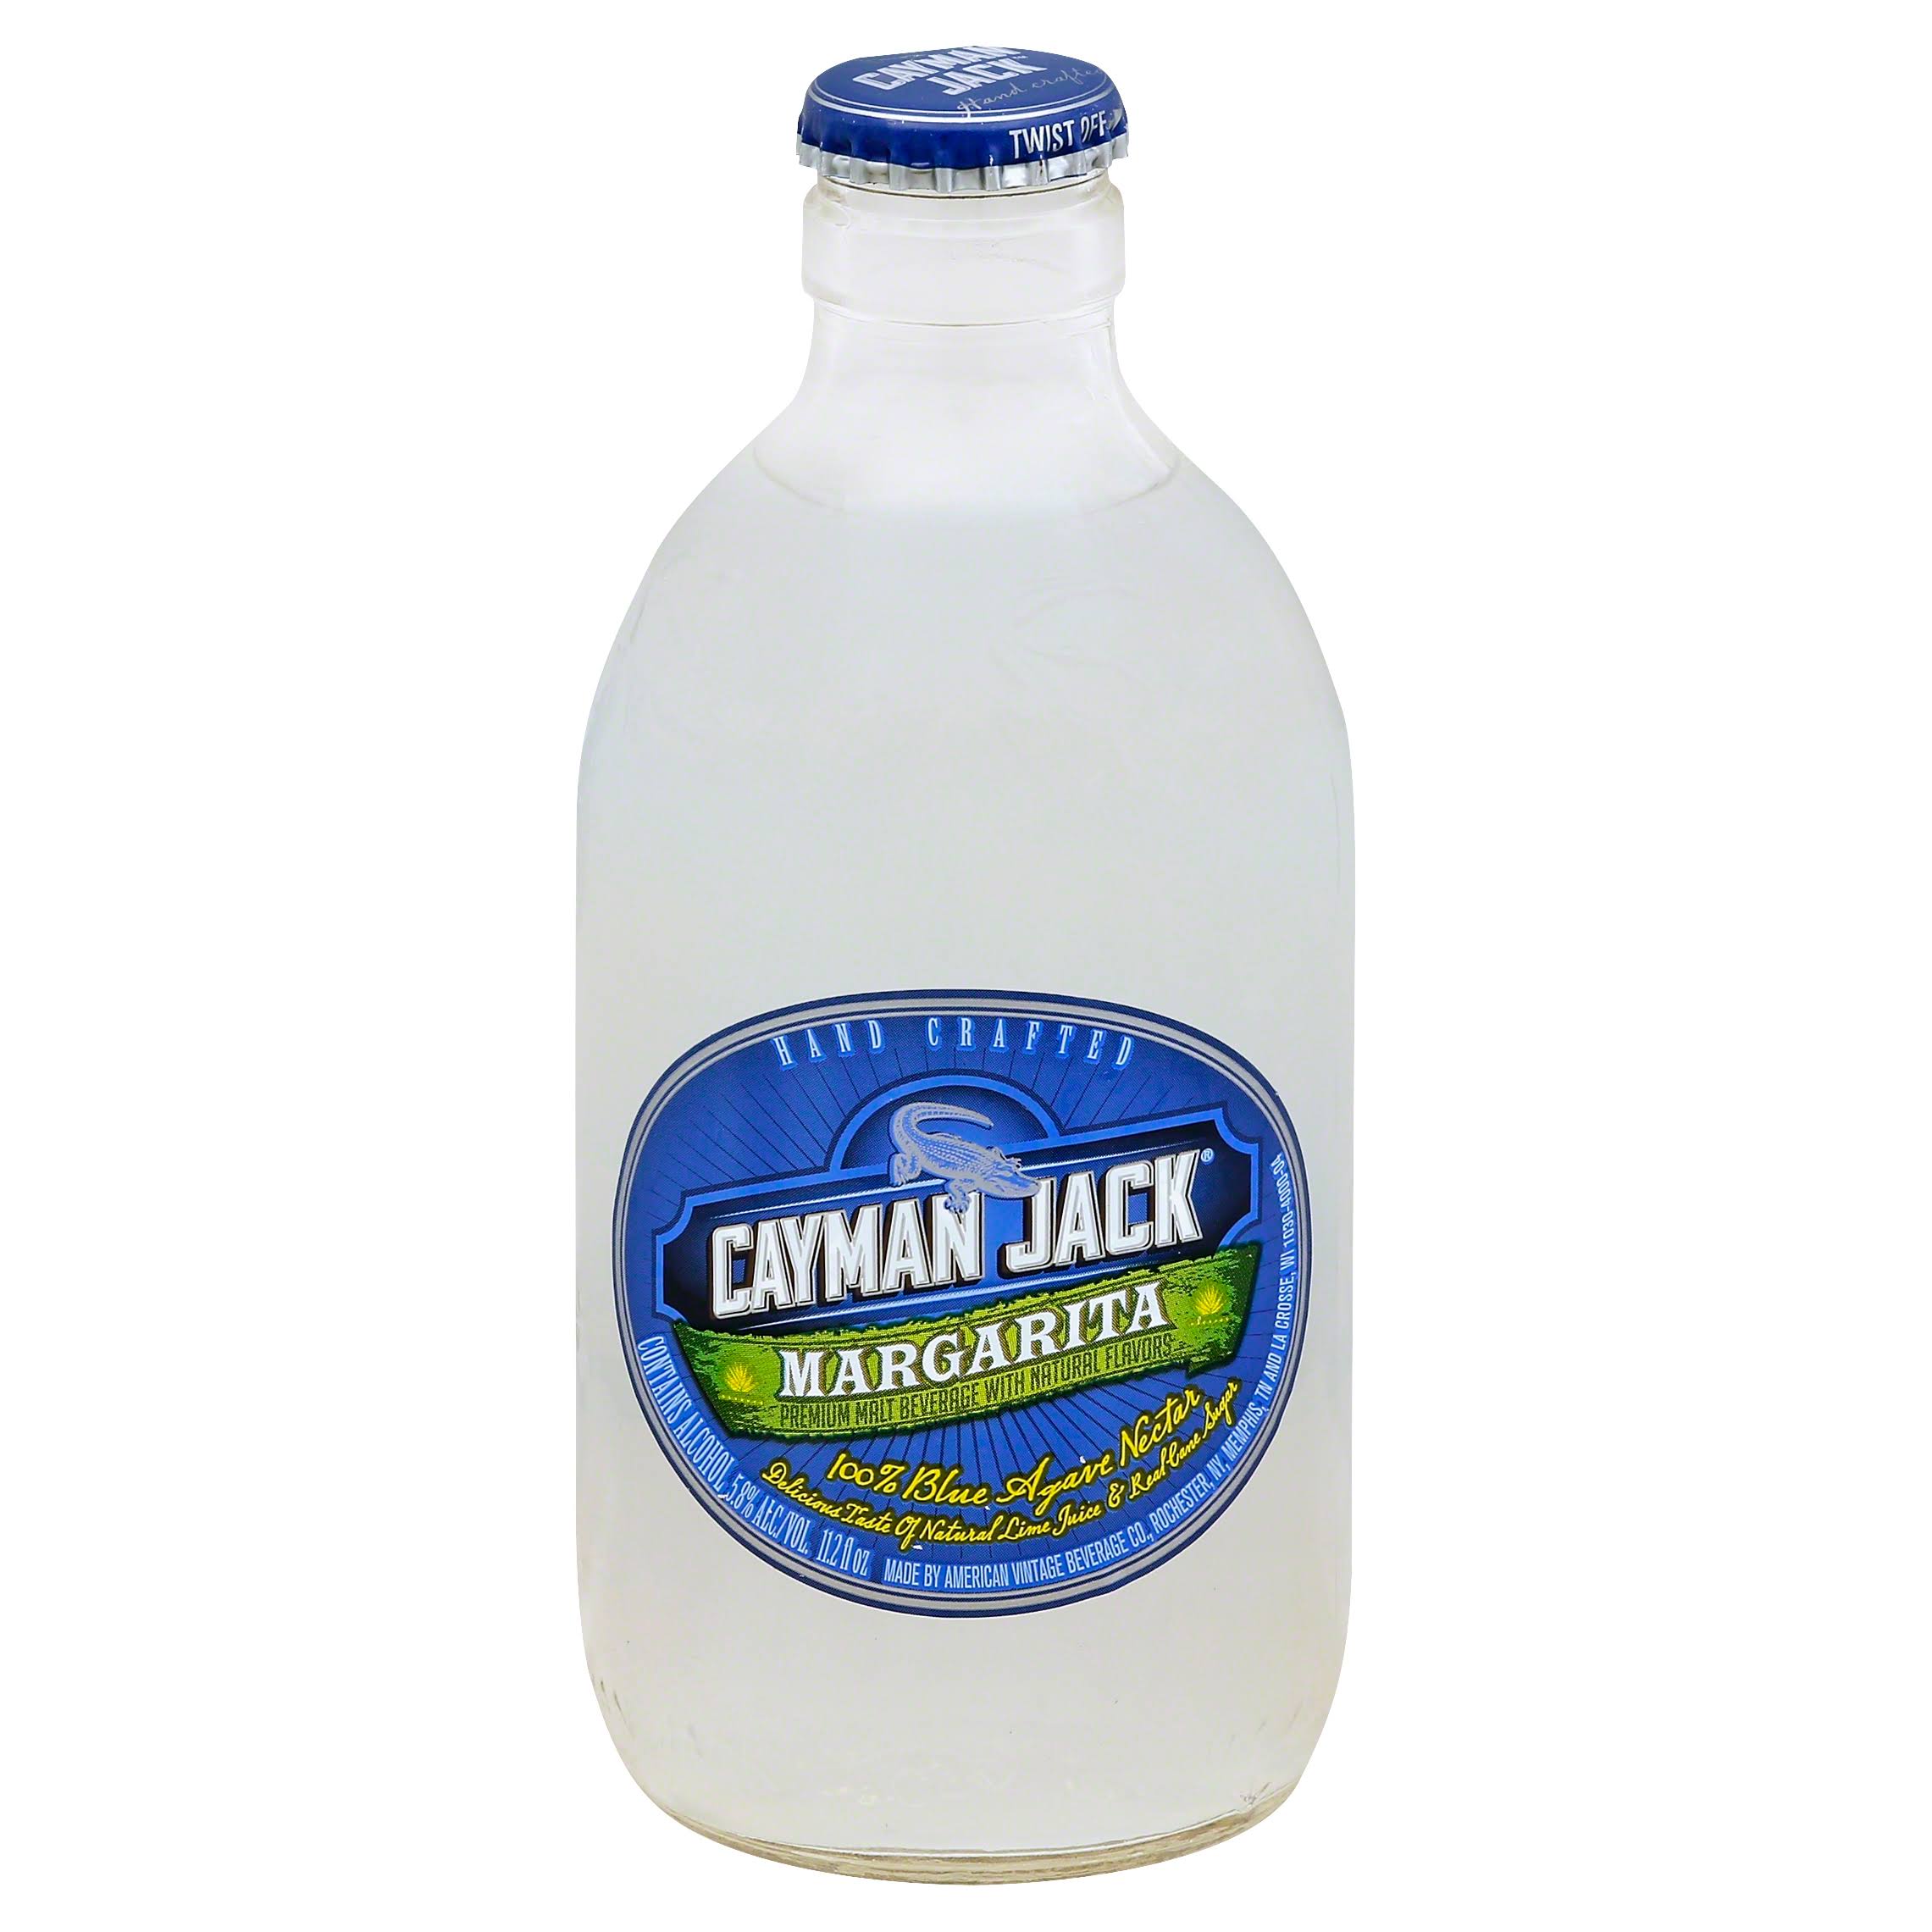 Cayman Jack Malt Beverage, Premium, Margarita - 11.2 fl oz